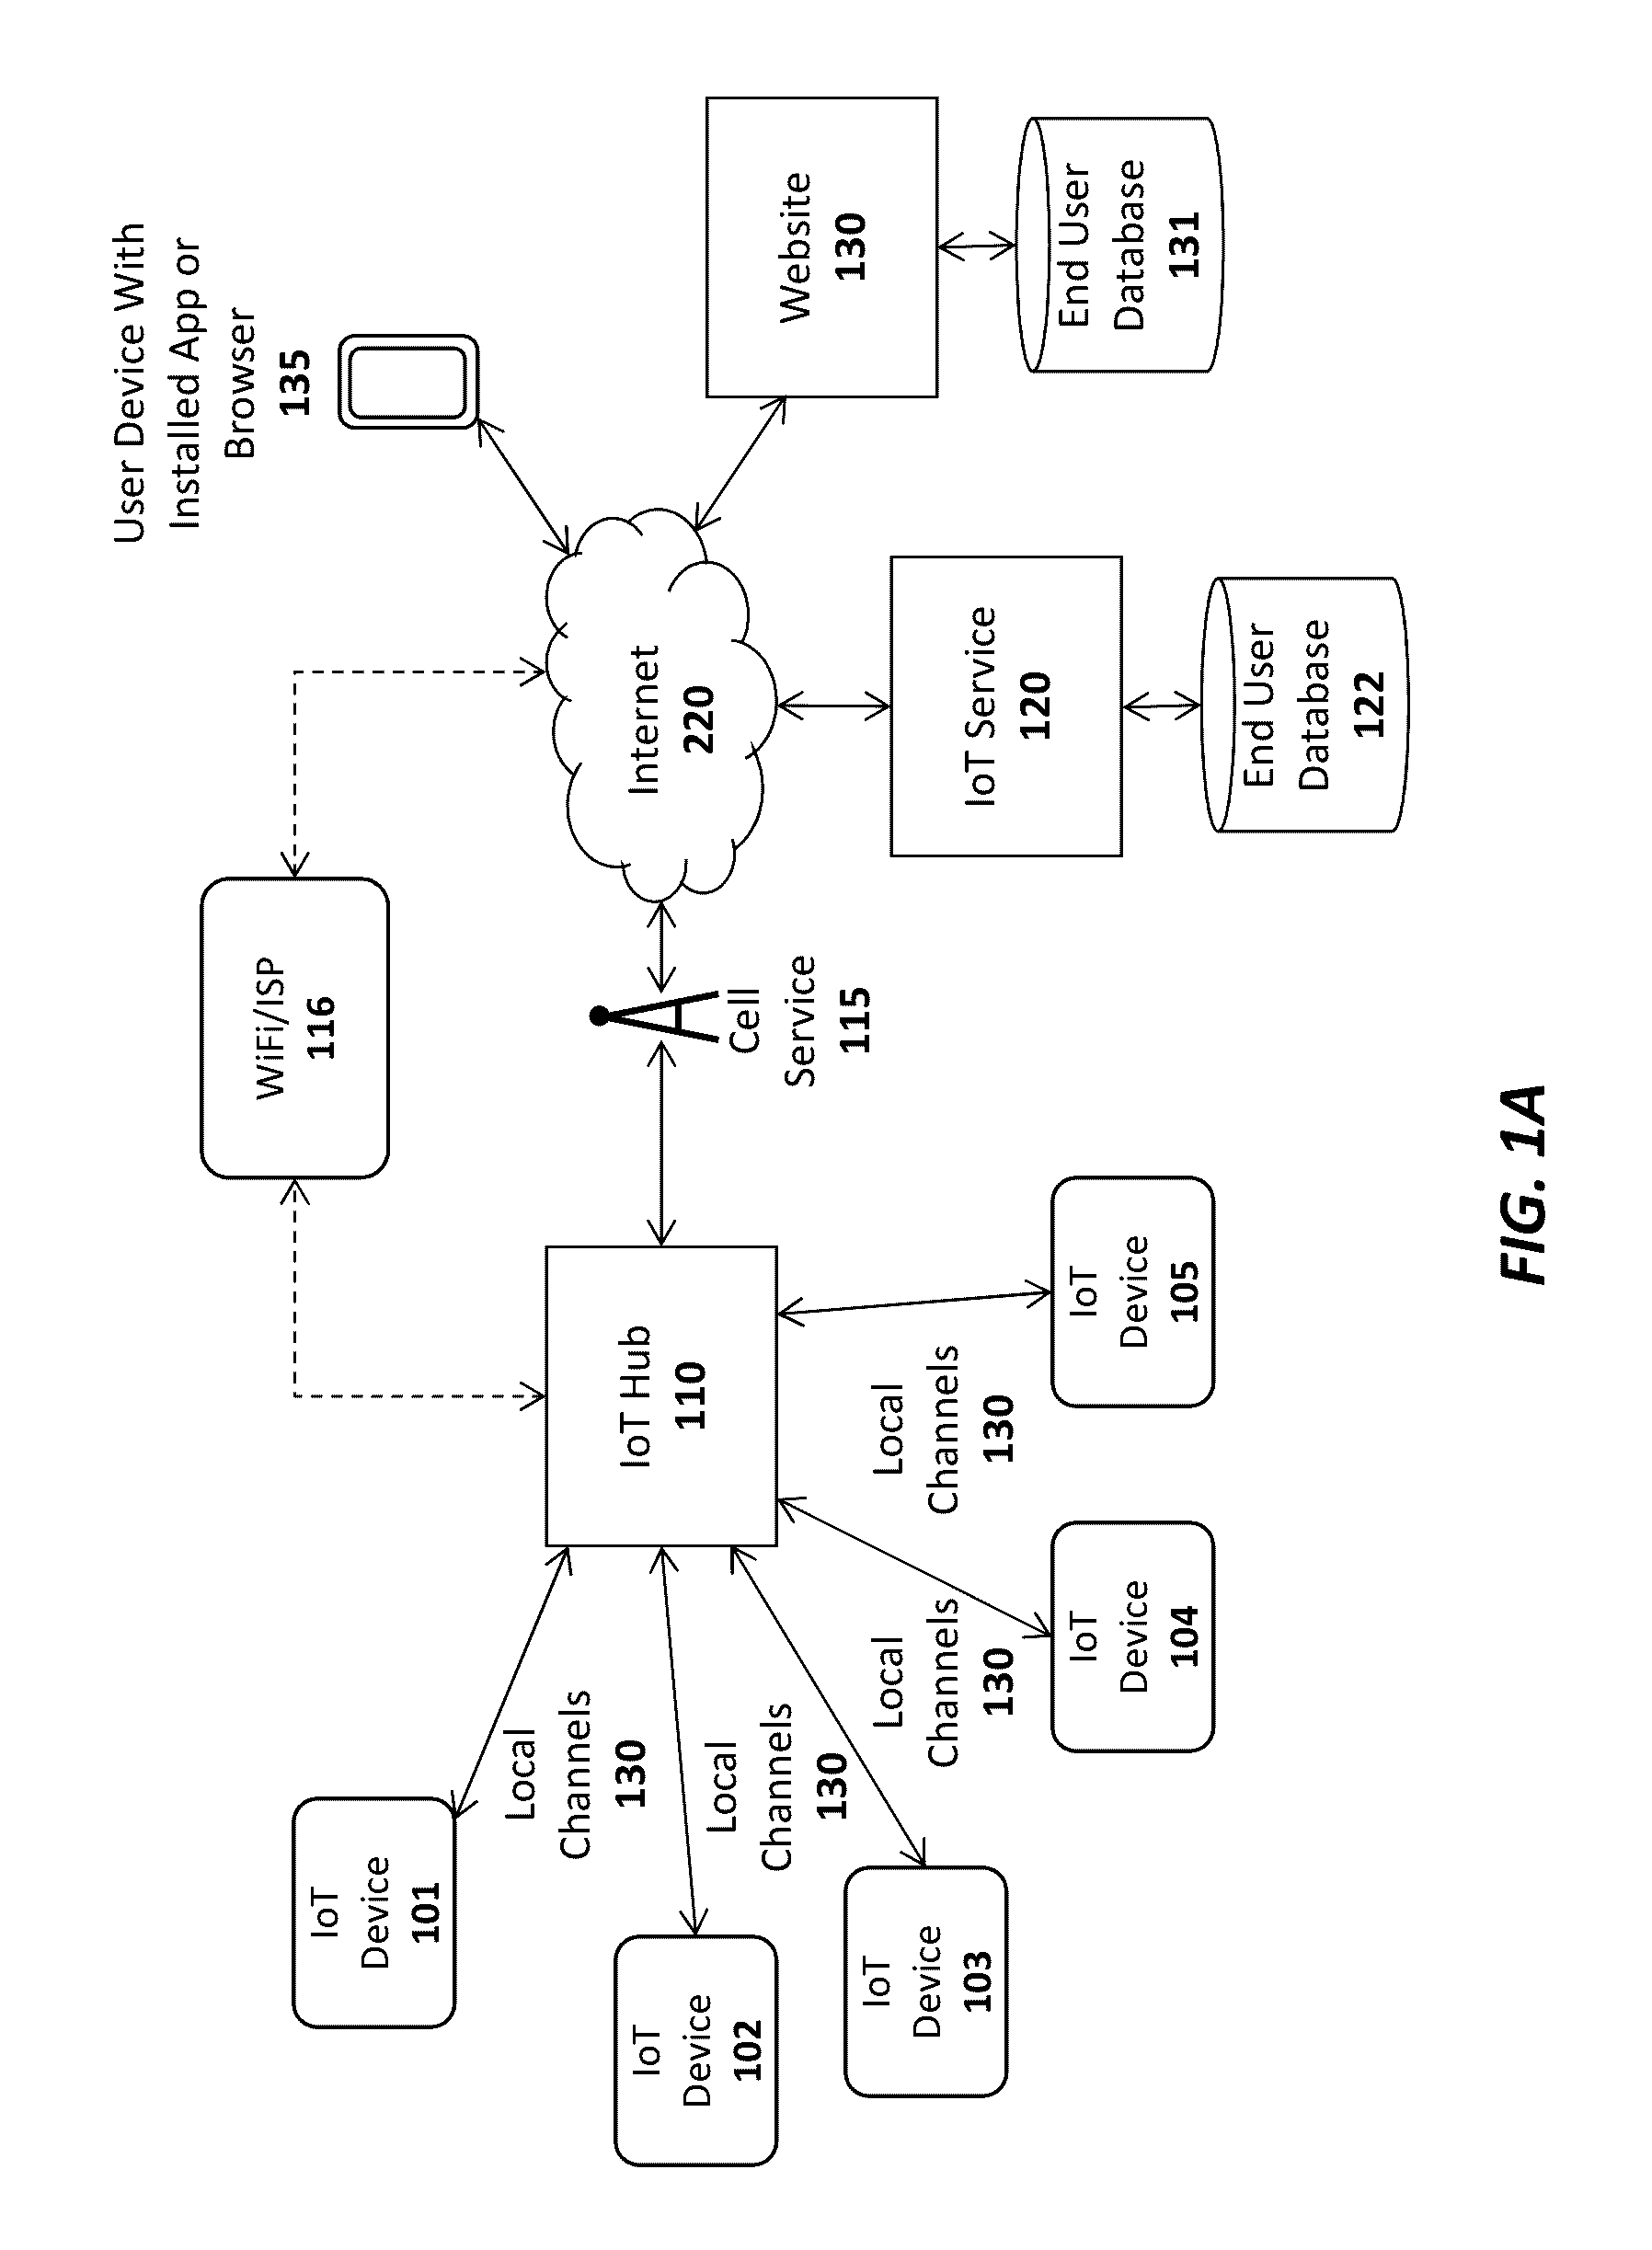 Smart register apparatus and method